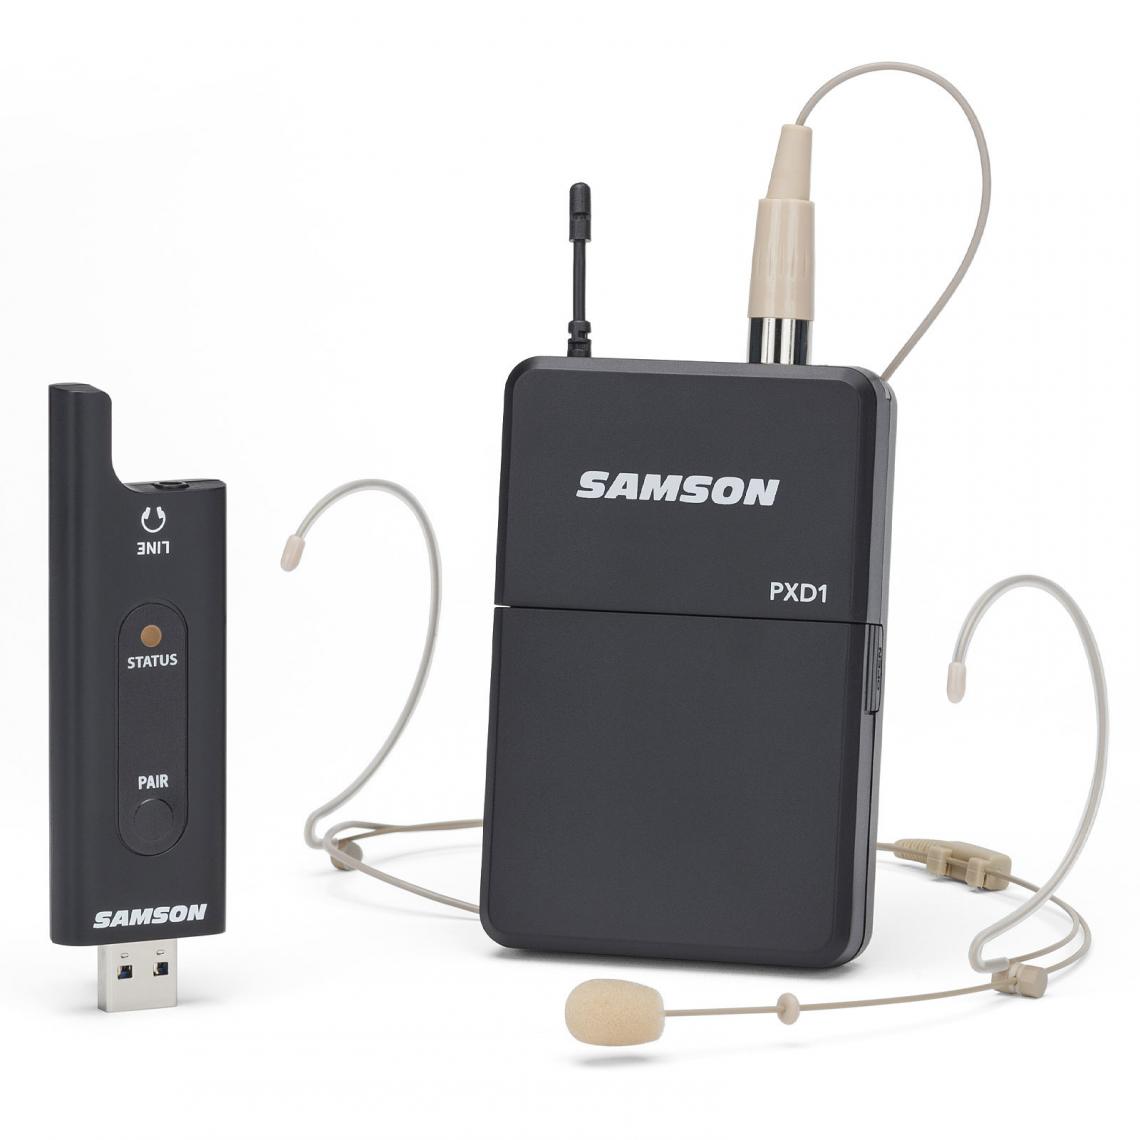 Samson - Samson XPD2 Headset - Microphone PC